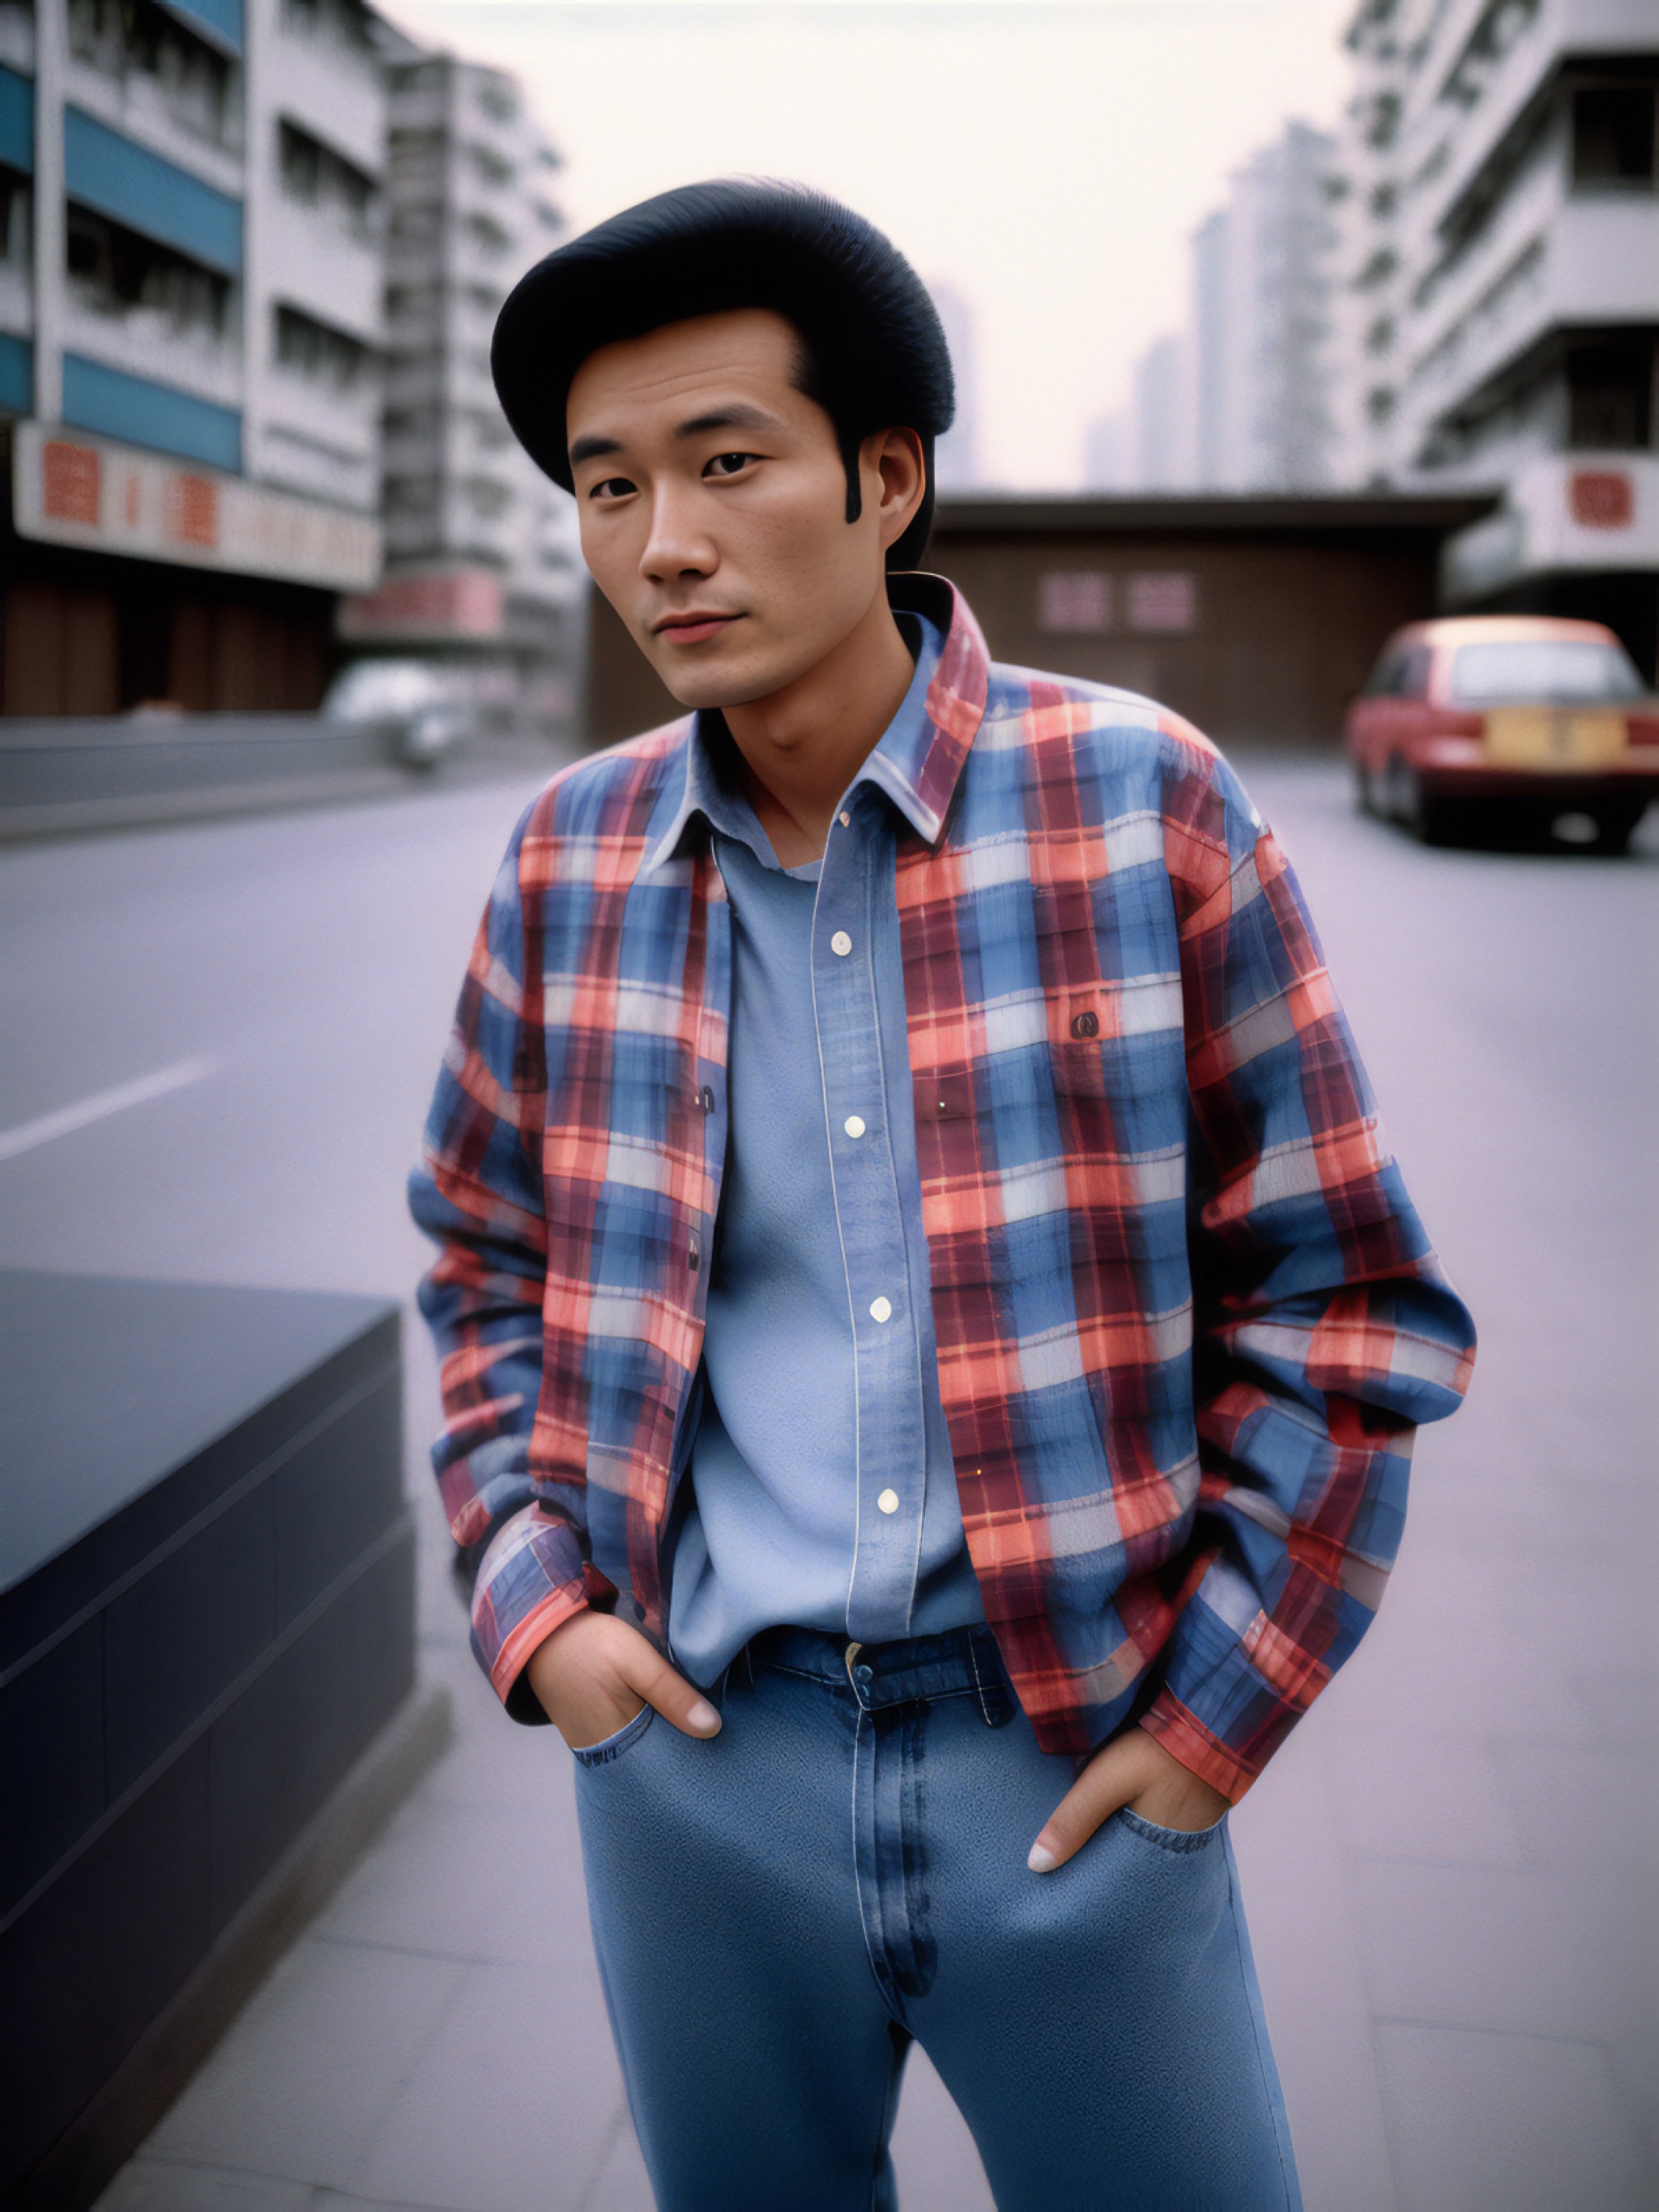 1980s-hair-style-portrait-beijing-men